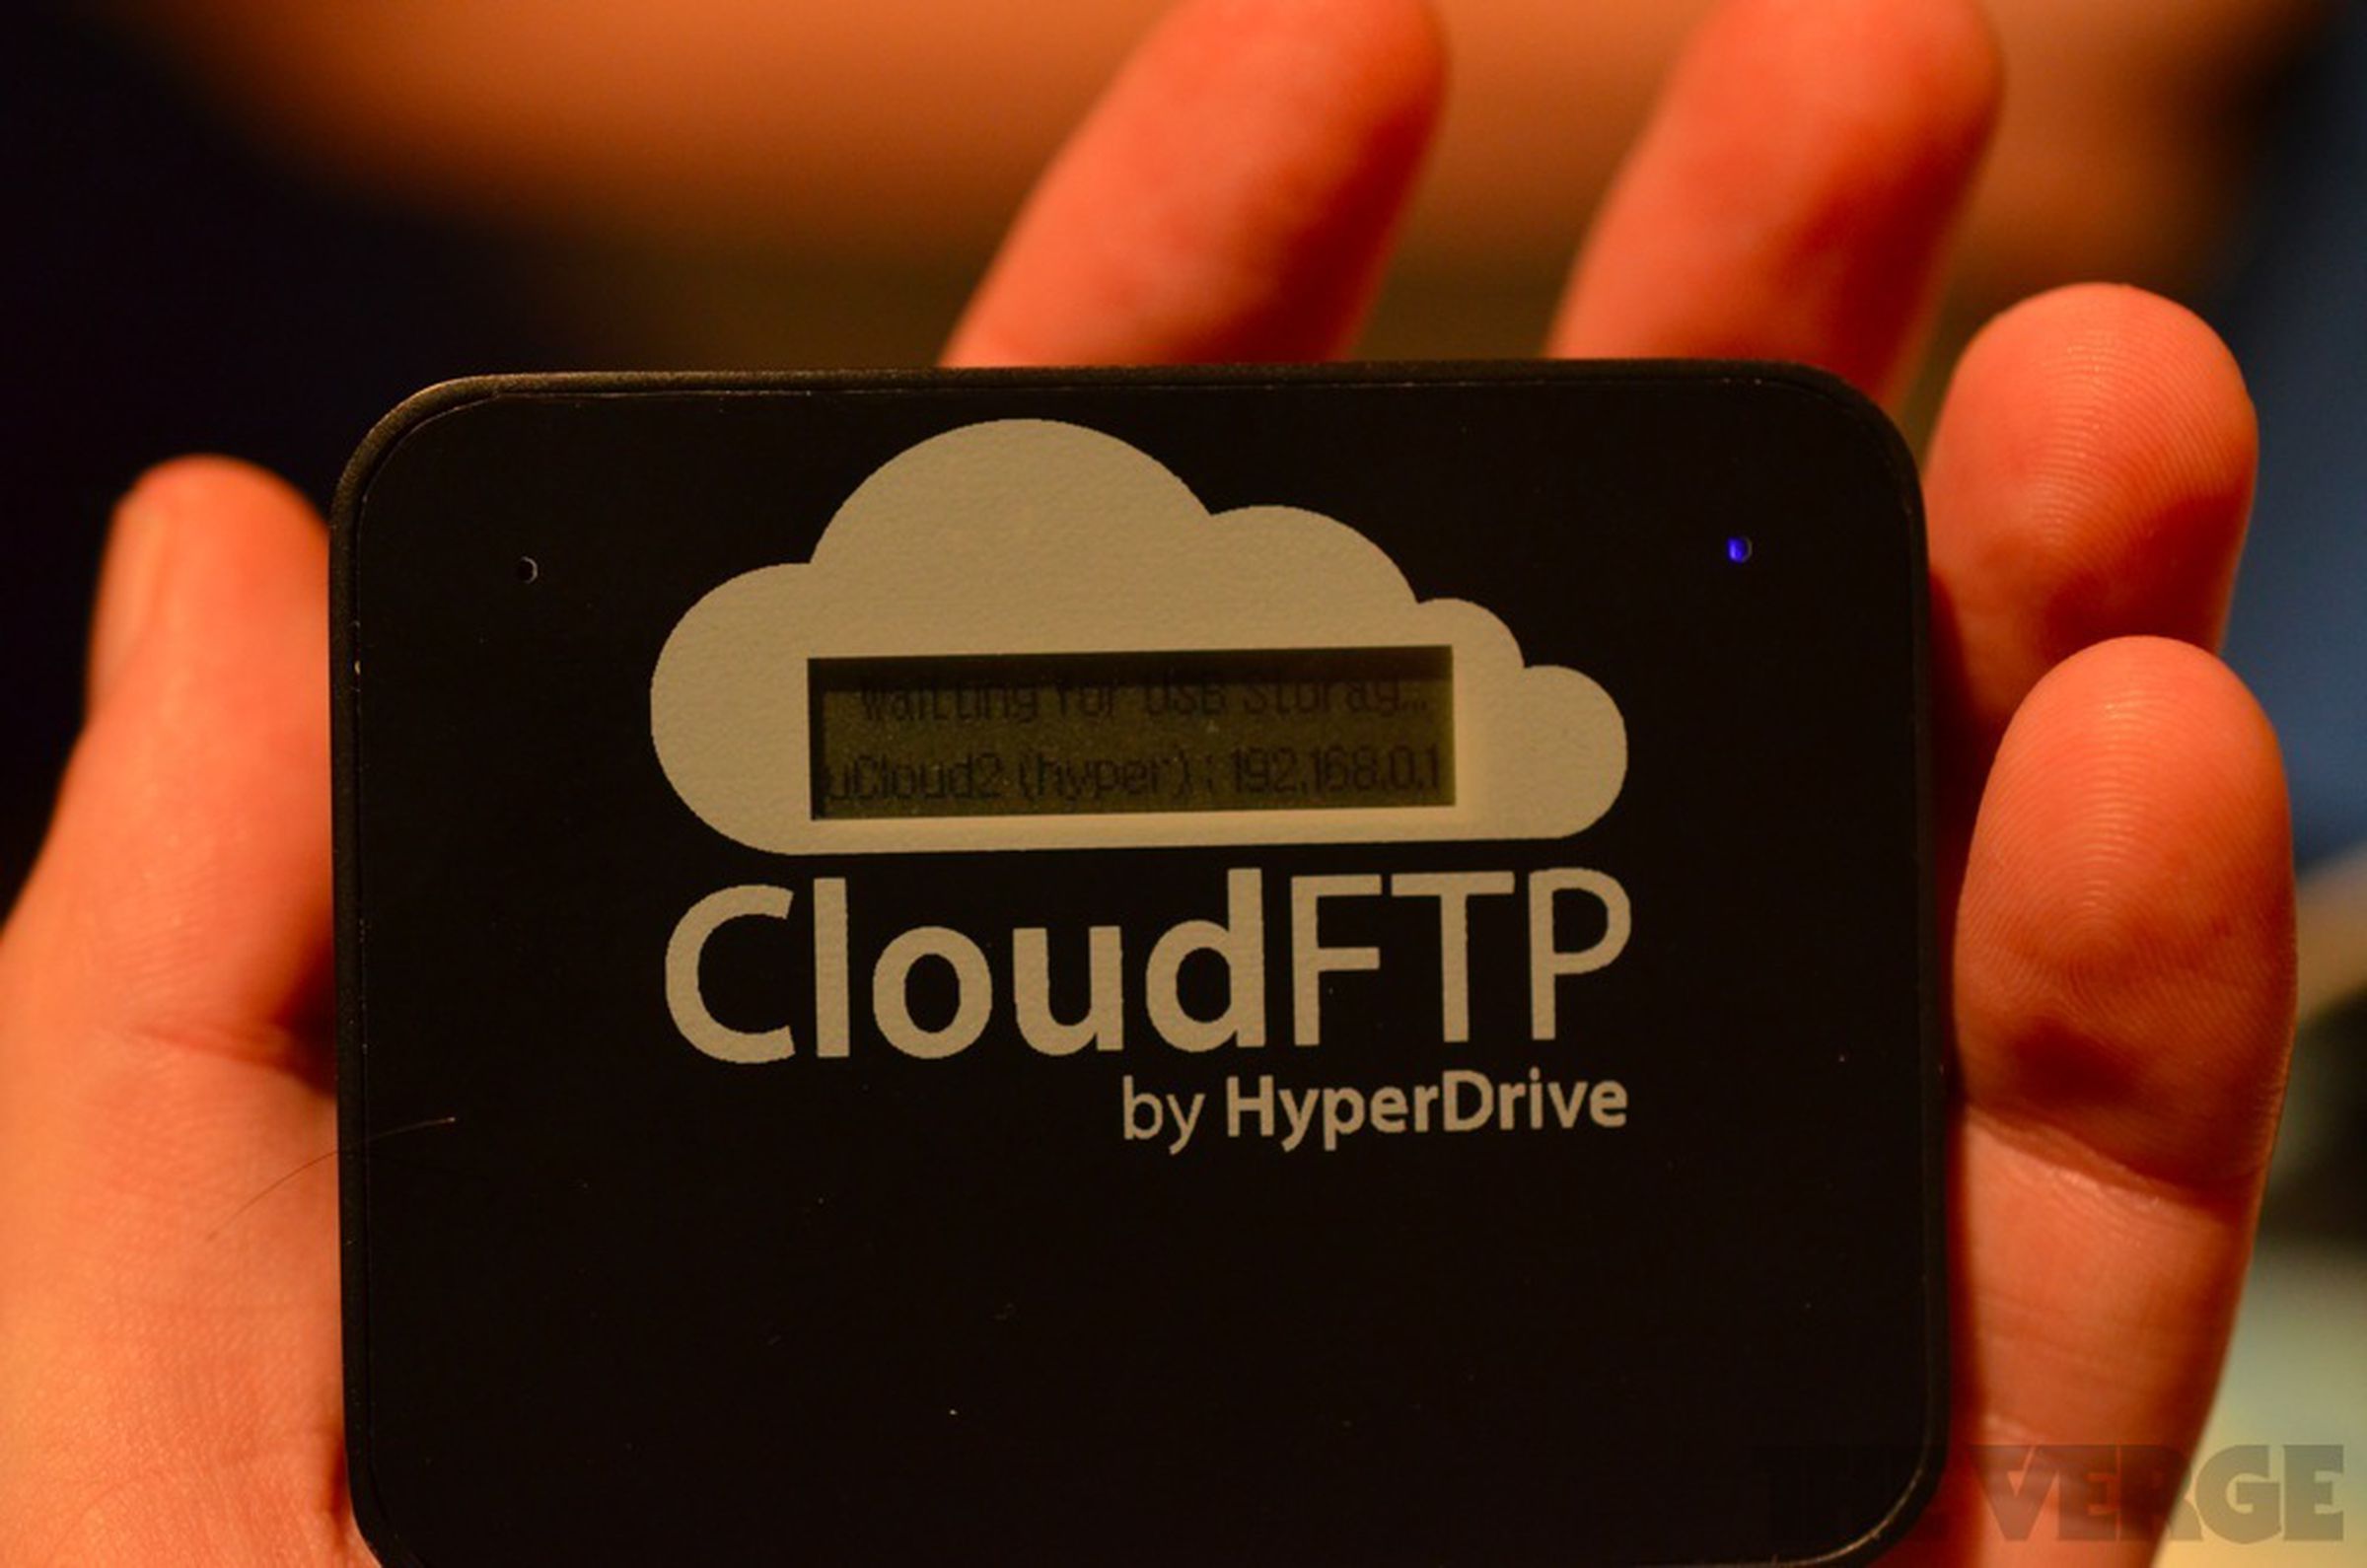 CloudFTP hands-on photos